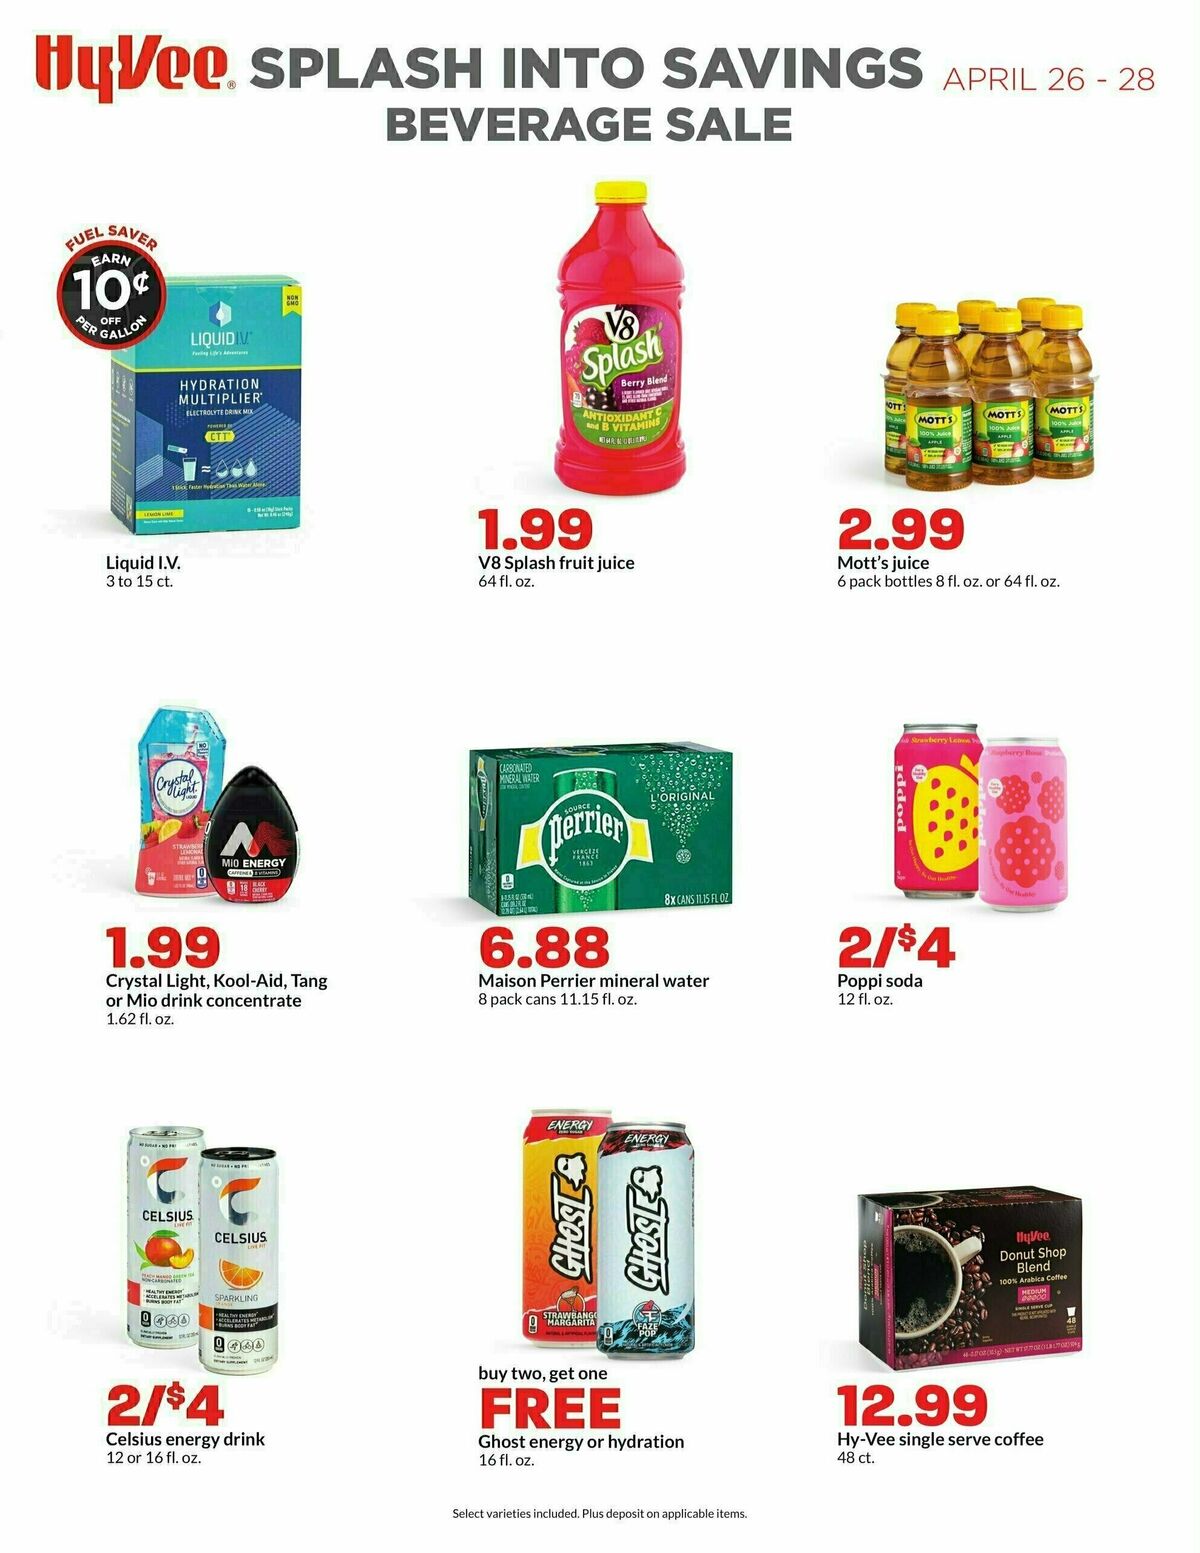 Hy-Vee Beverage Sale Weekly Ad from April 26